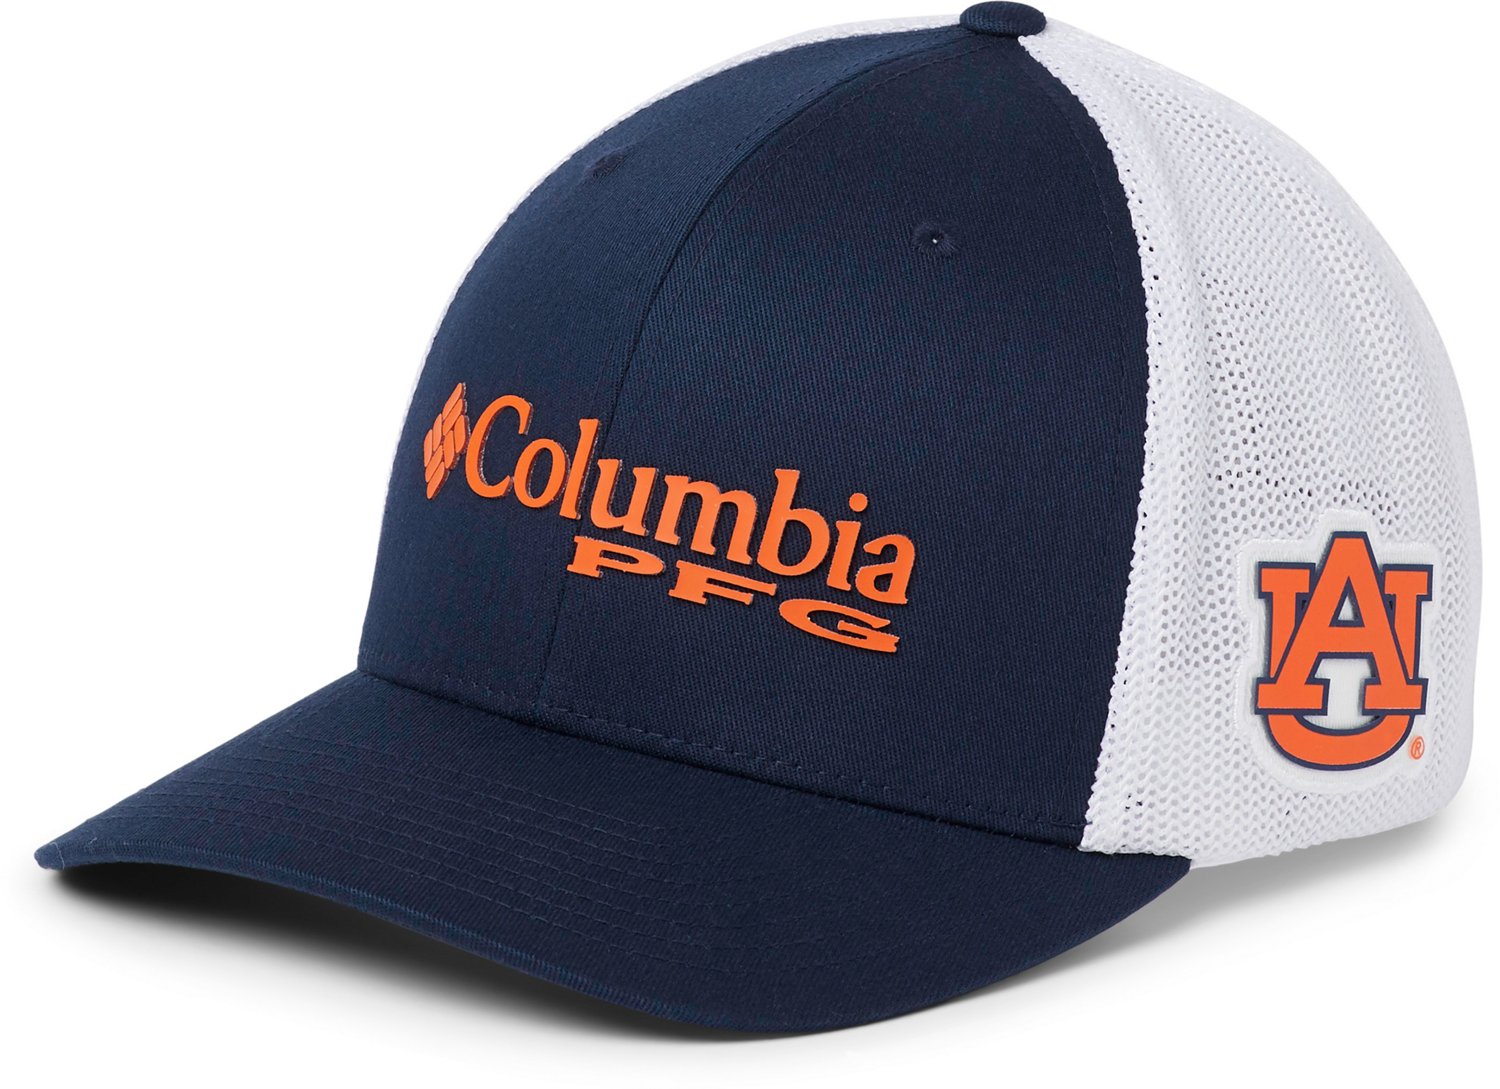 Columbia Sportswear Men's Auburn University Collegiate PFG Mesh Ball Cap